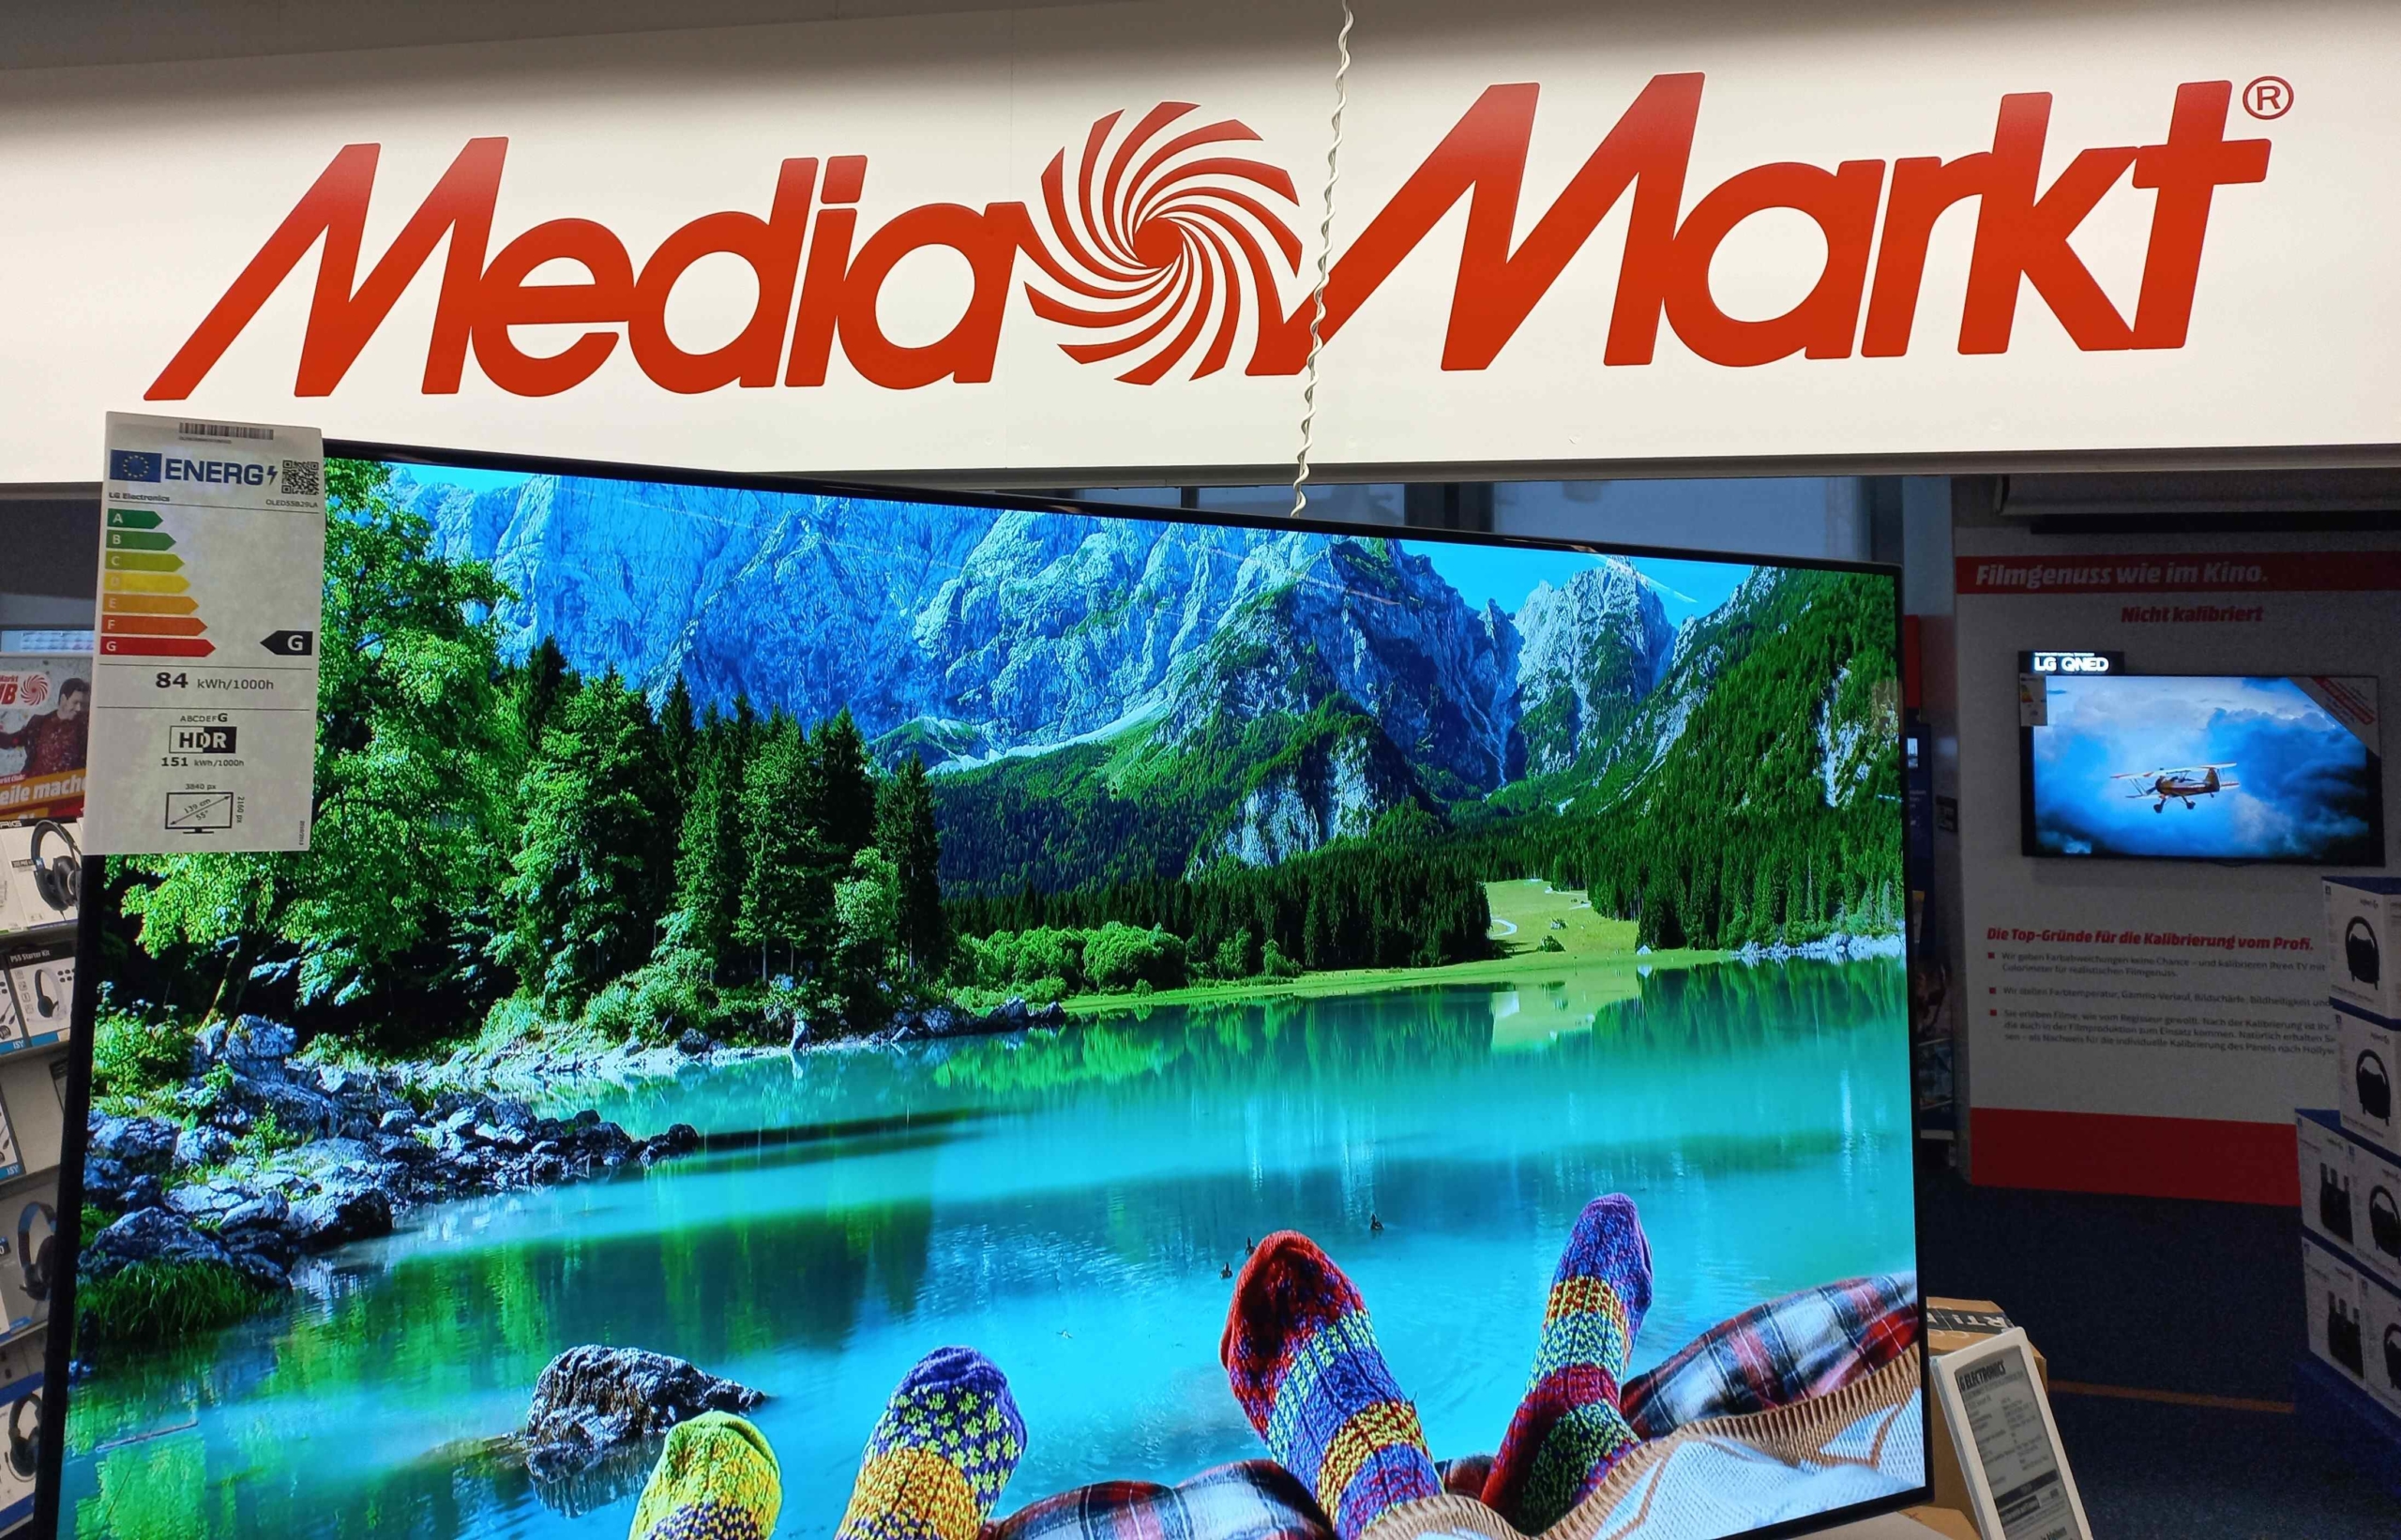 MEDIA MARKT - Innsbrucker Str. 95, Wörgl, Tirol, Austria - Electronics -  Phone Number - Yelp